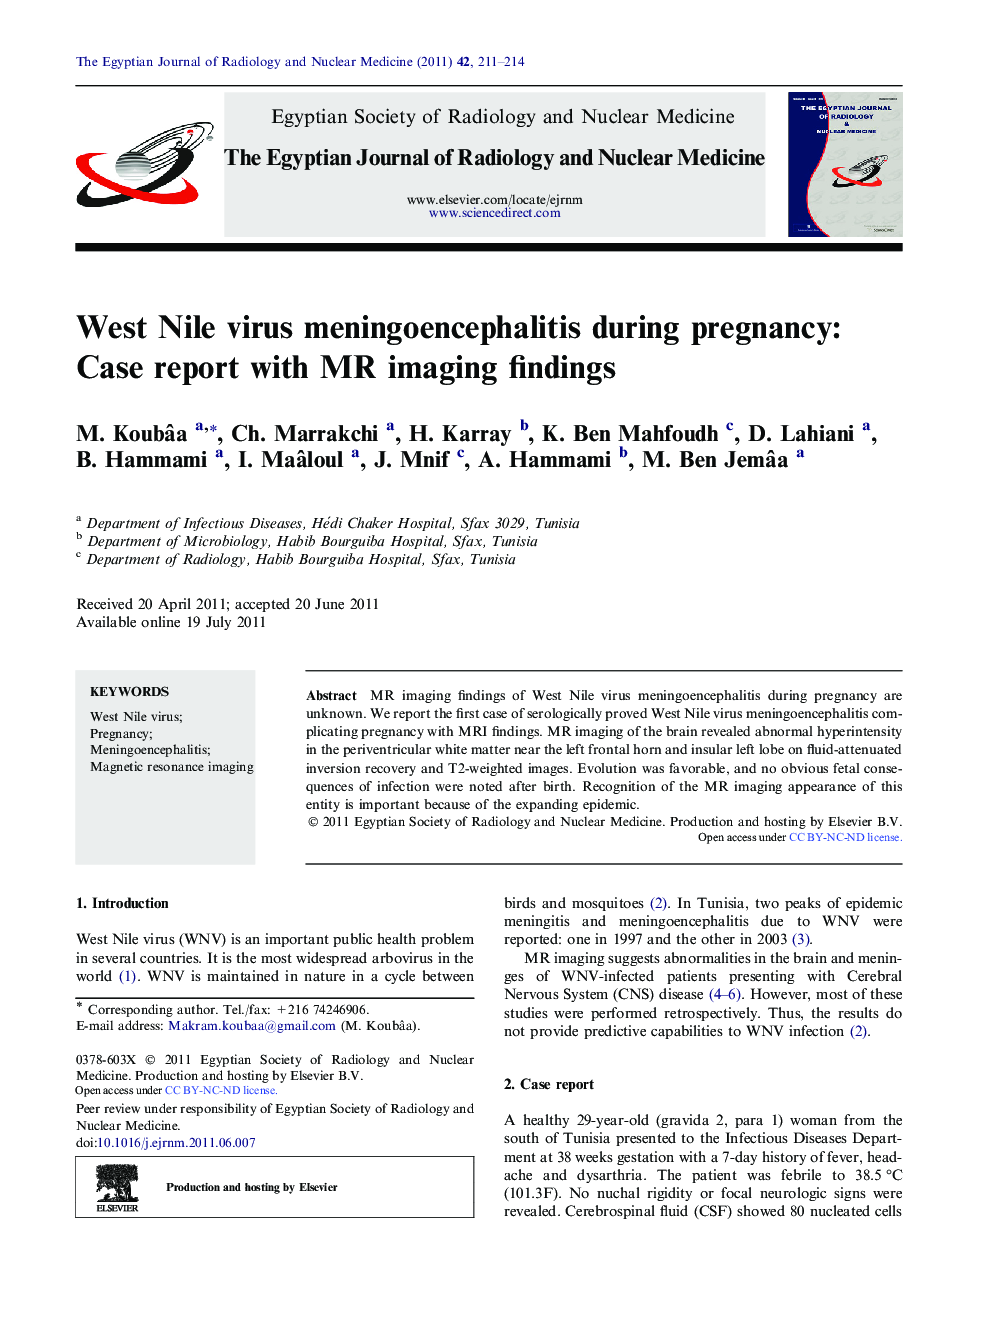 West Nile virus meningoencephalitis during pregnancy: Case report with MR imaging findings 